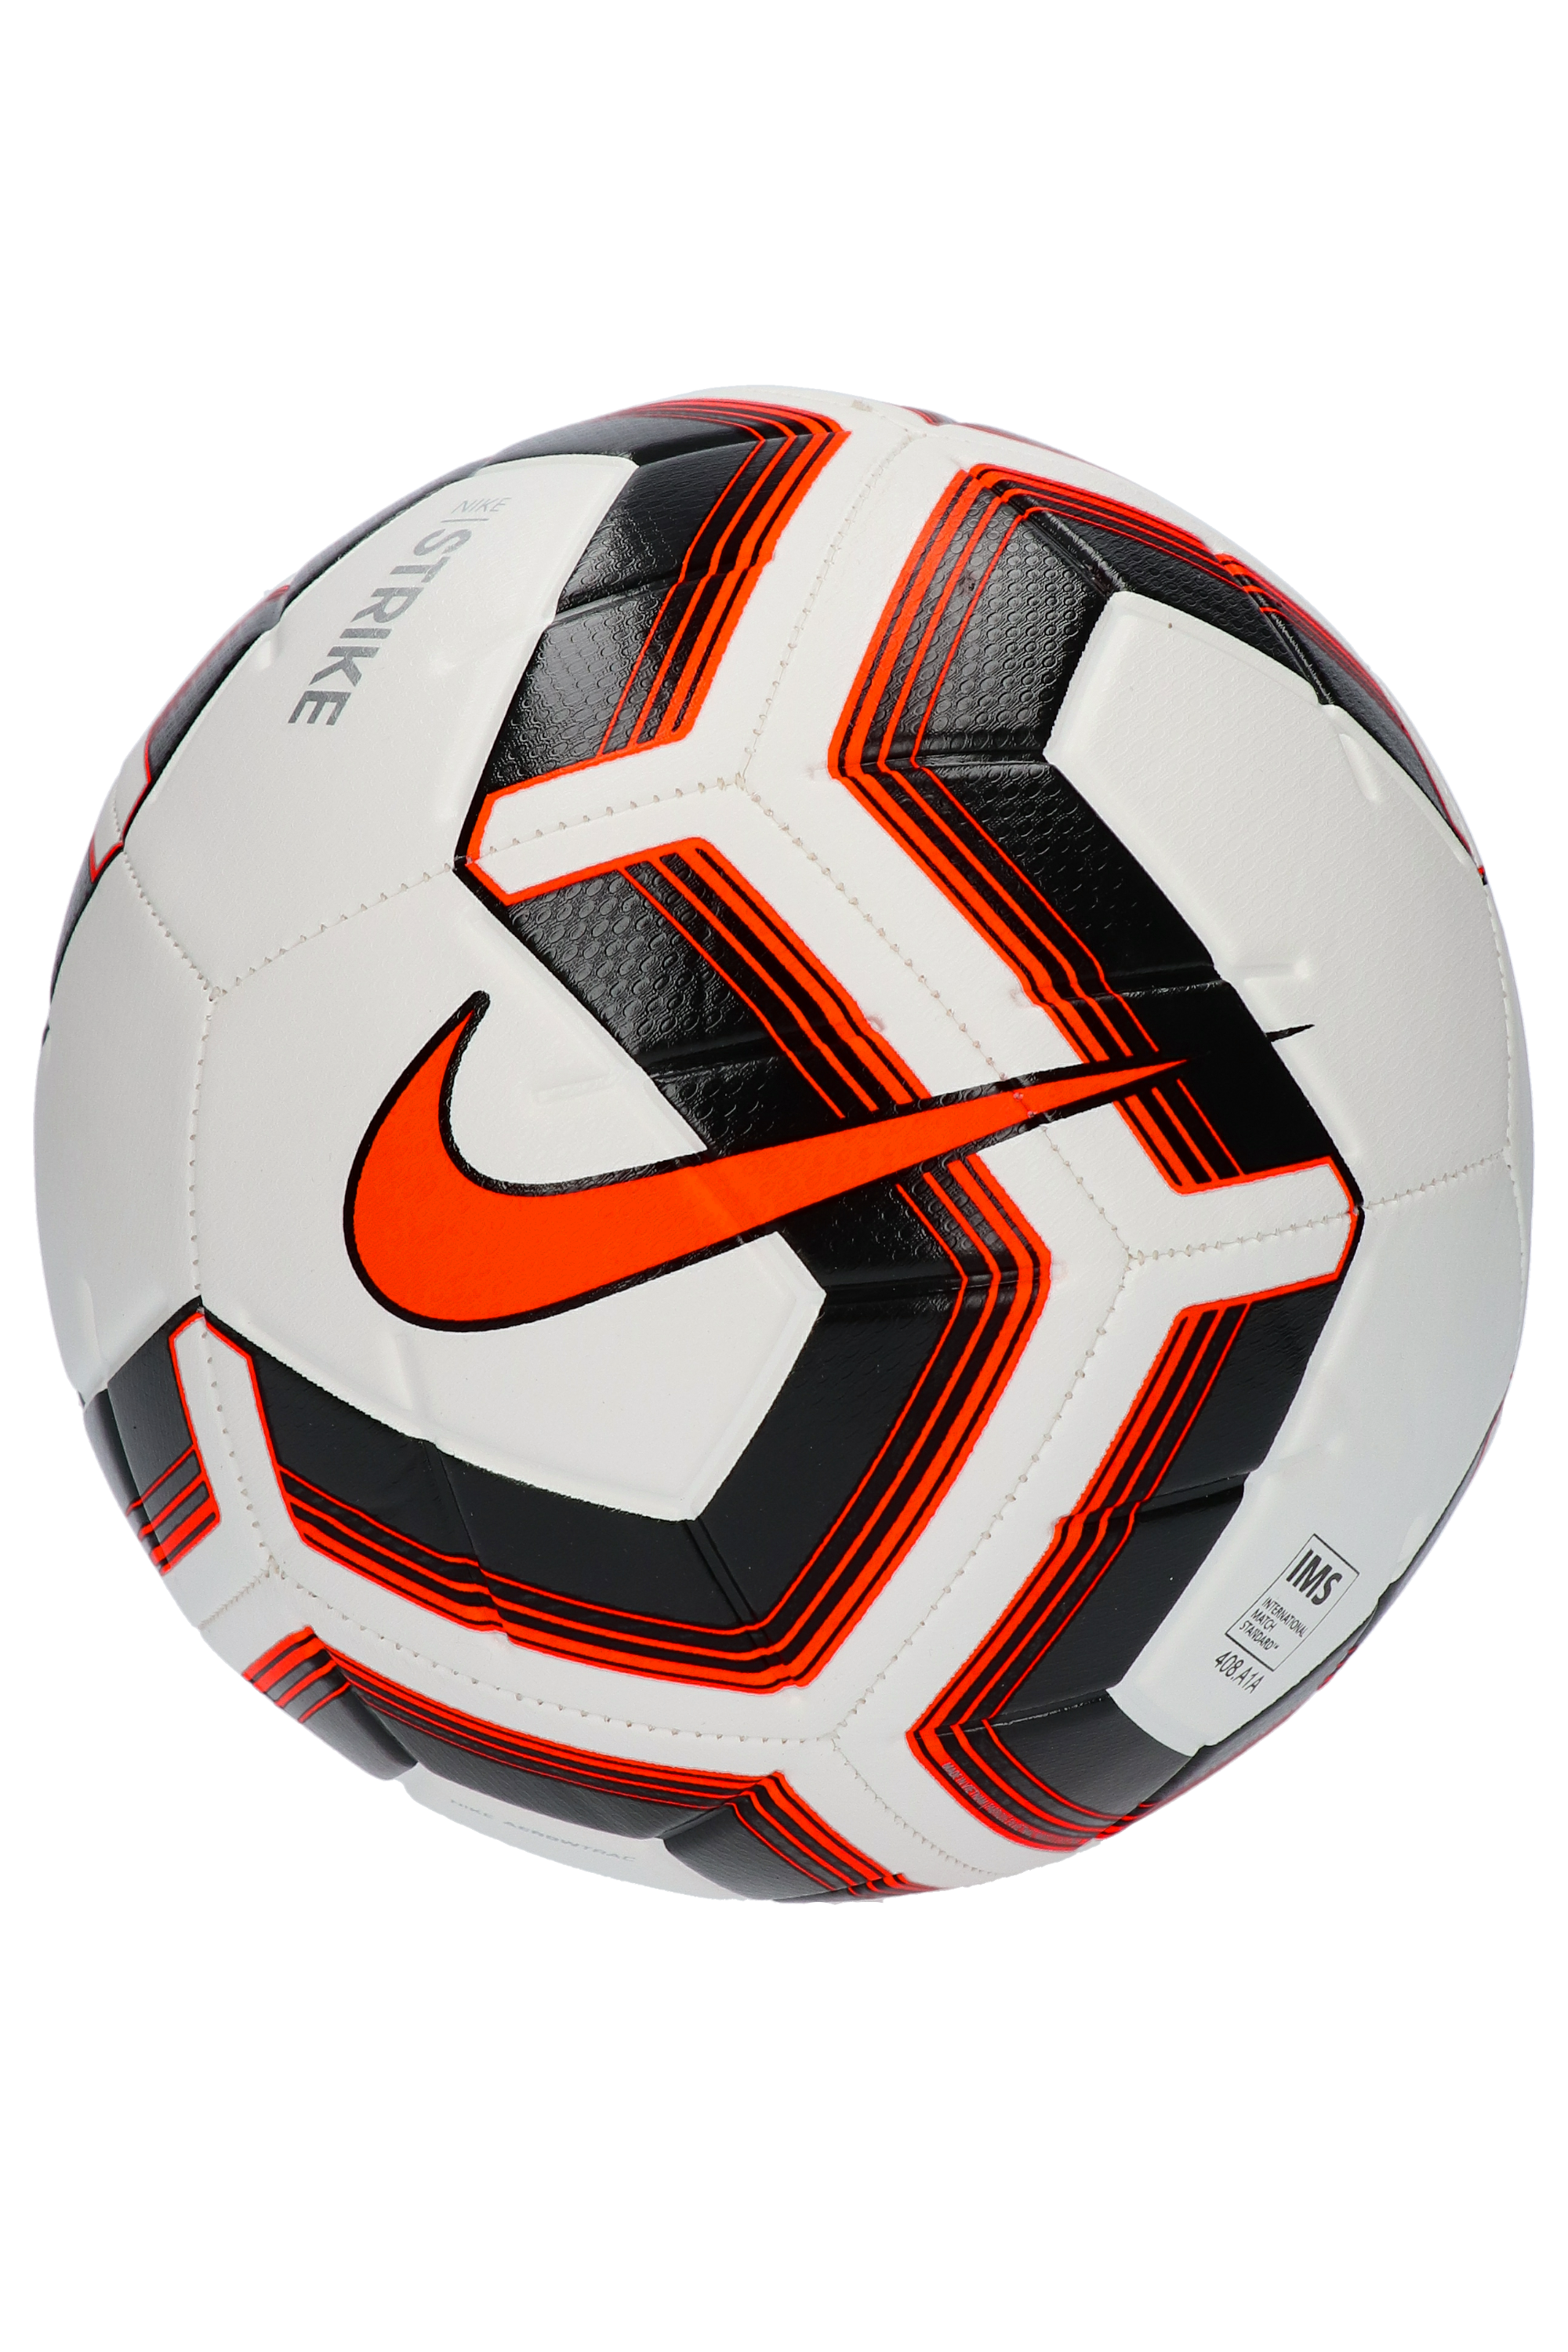 Razernij Kruiden erwt Nike Strike Football Size 3 Netherlands, SAVE 31% - icarus.photos